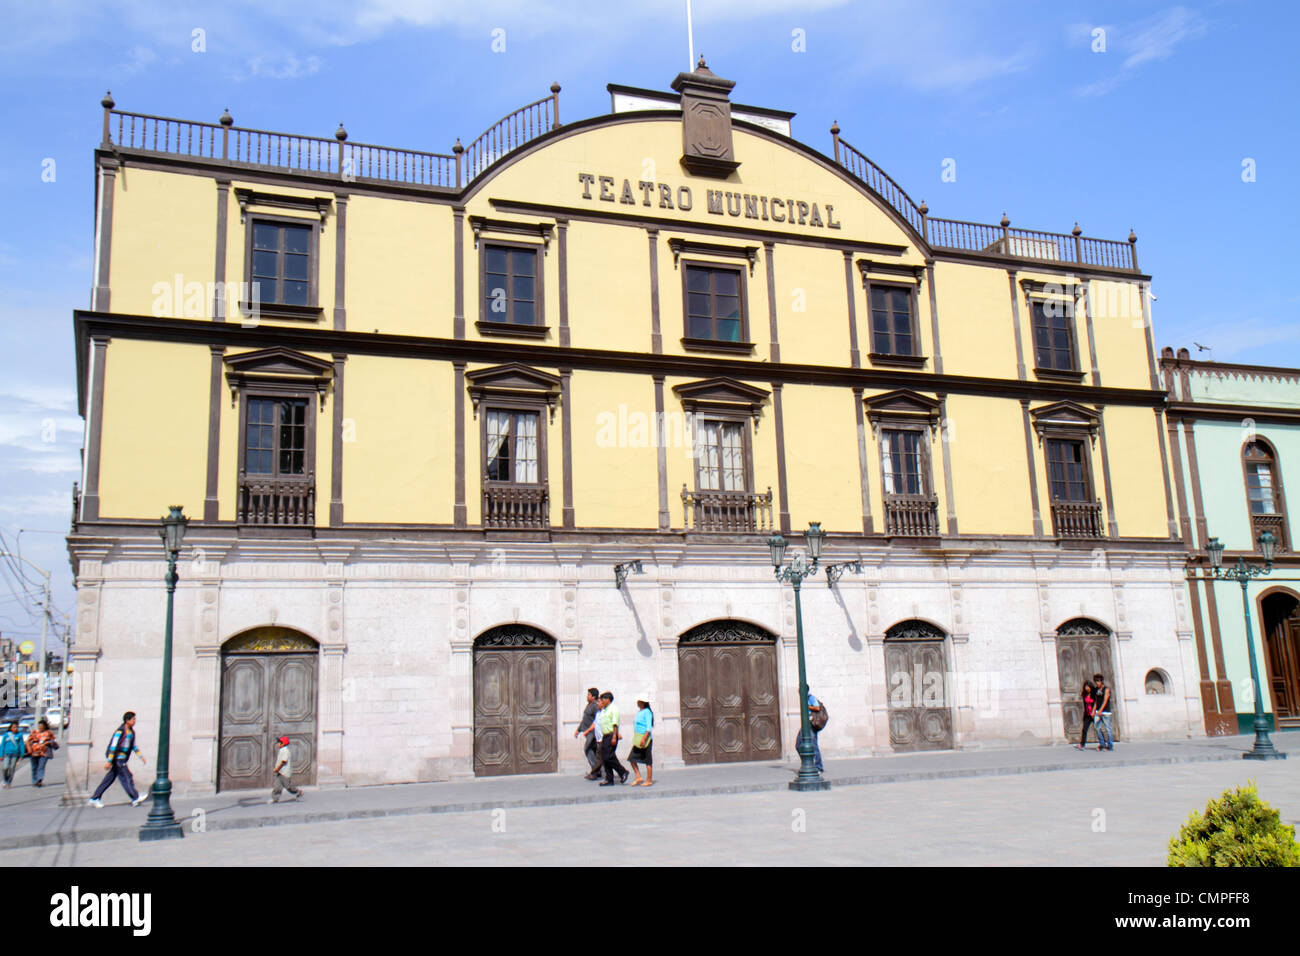 Tacna Peru,Avenida 2 de Mayo,Teatro Municipal,theater,city theatre,culture,art,building,1870,preservation,facade,architecture quarried stone,Hispanic Stock Photo